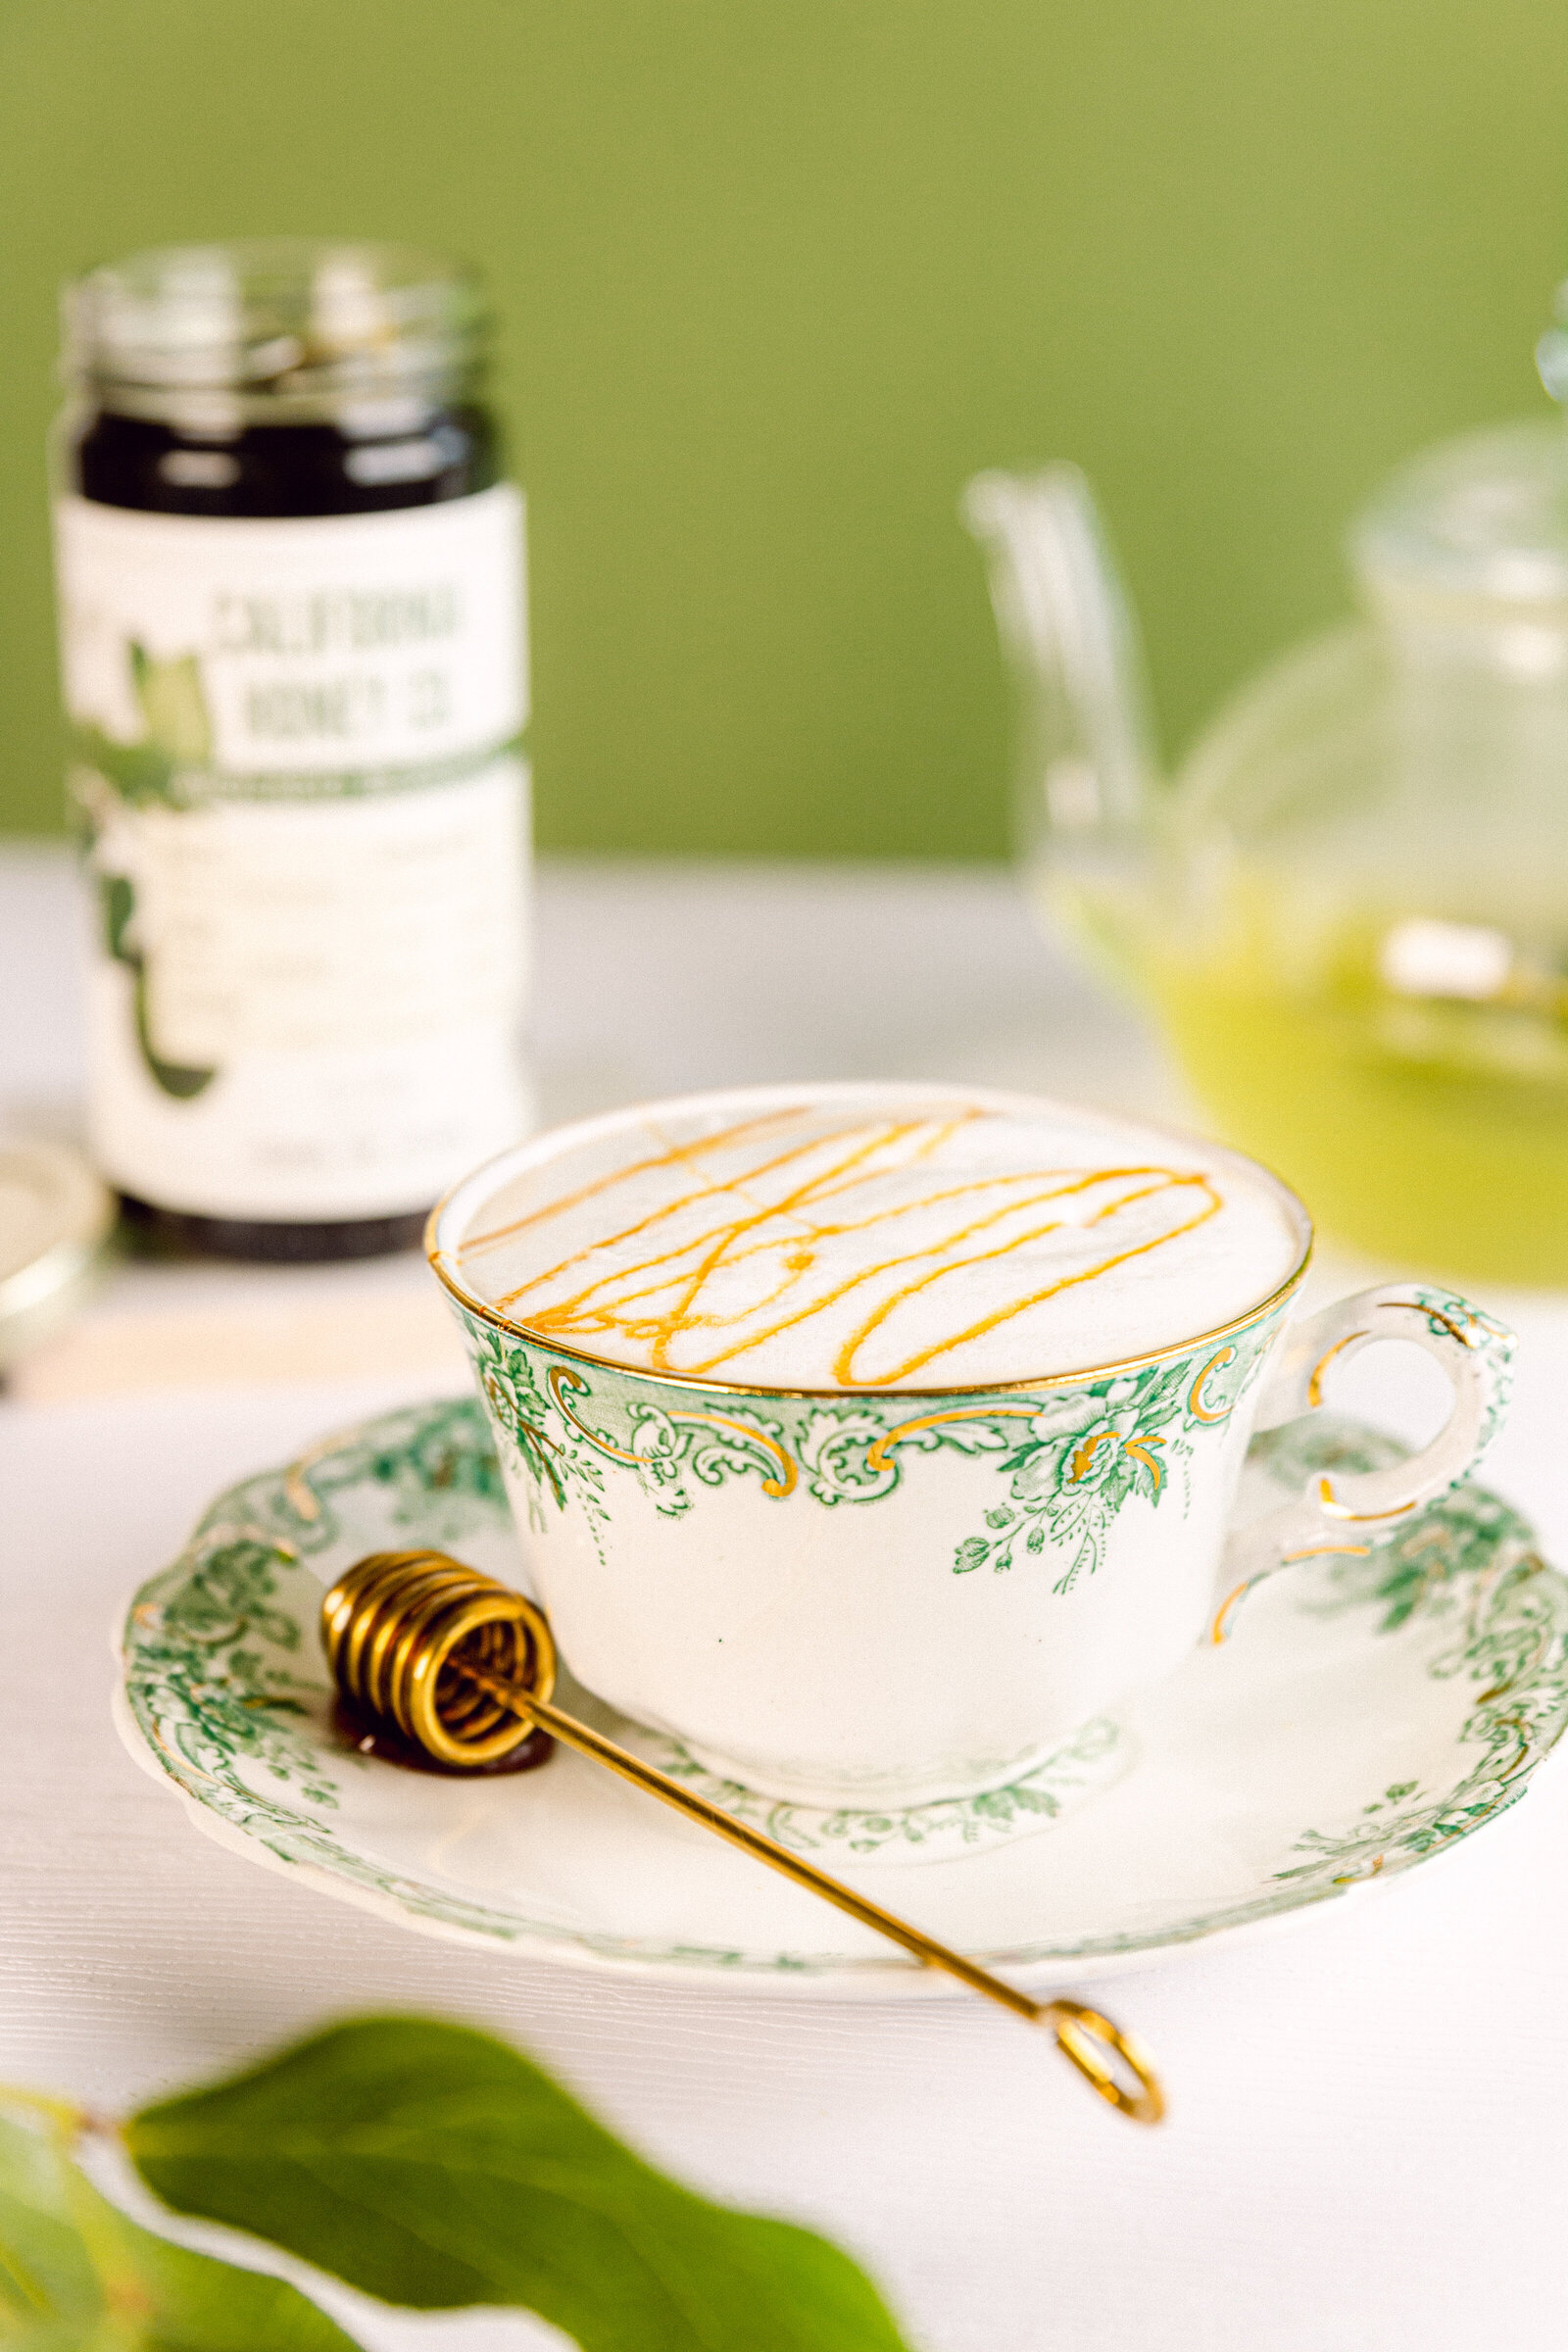 Green Green Tea coffee shop honey styled latte photography  by Chelsea Loren in San Diego, California